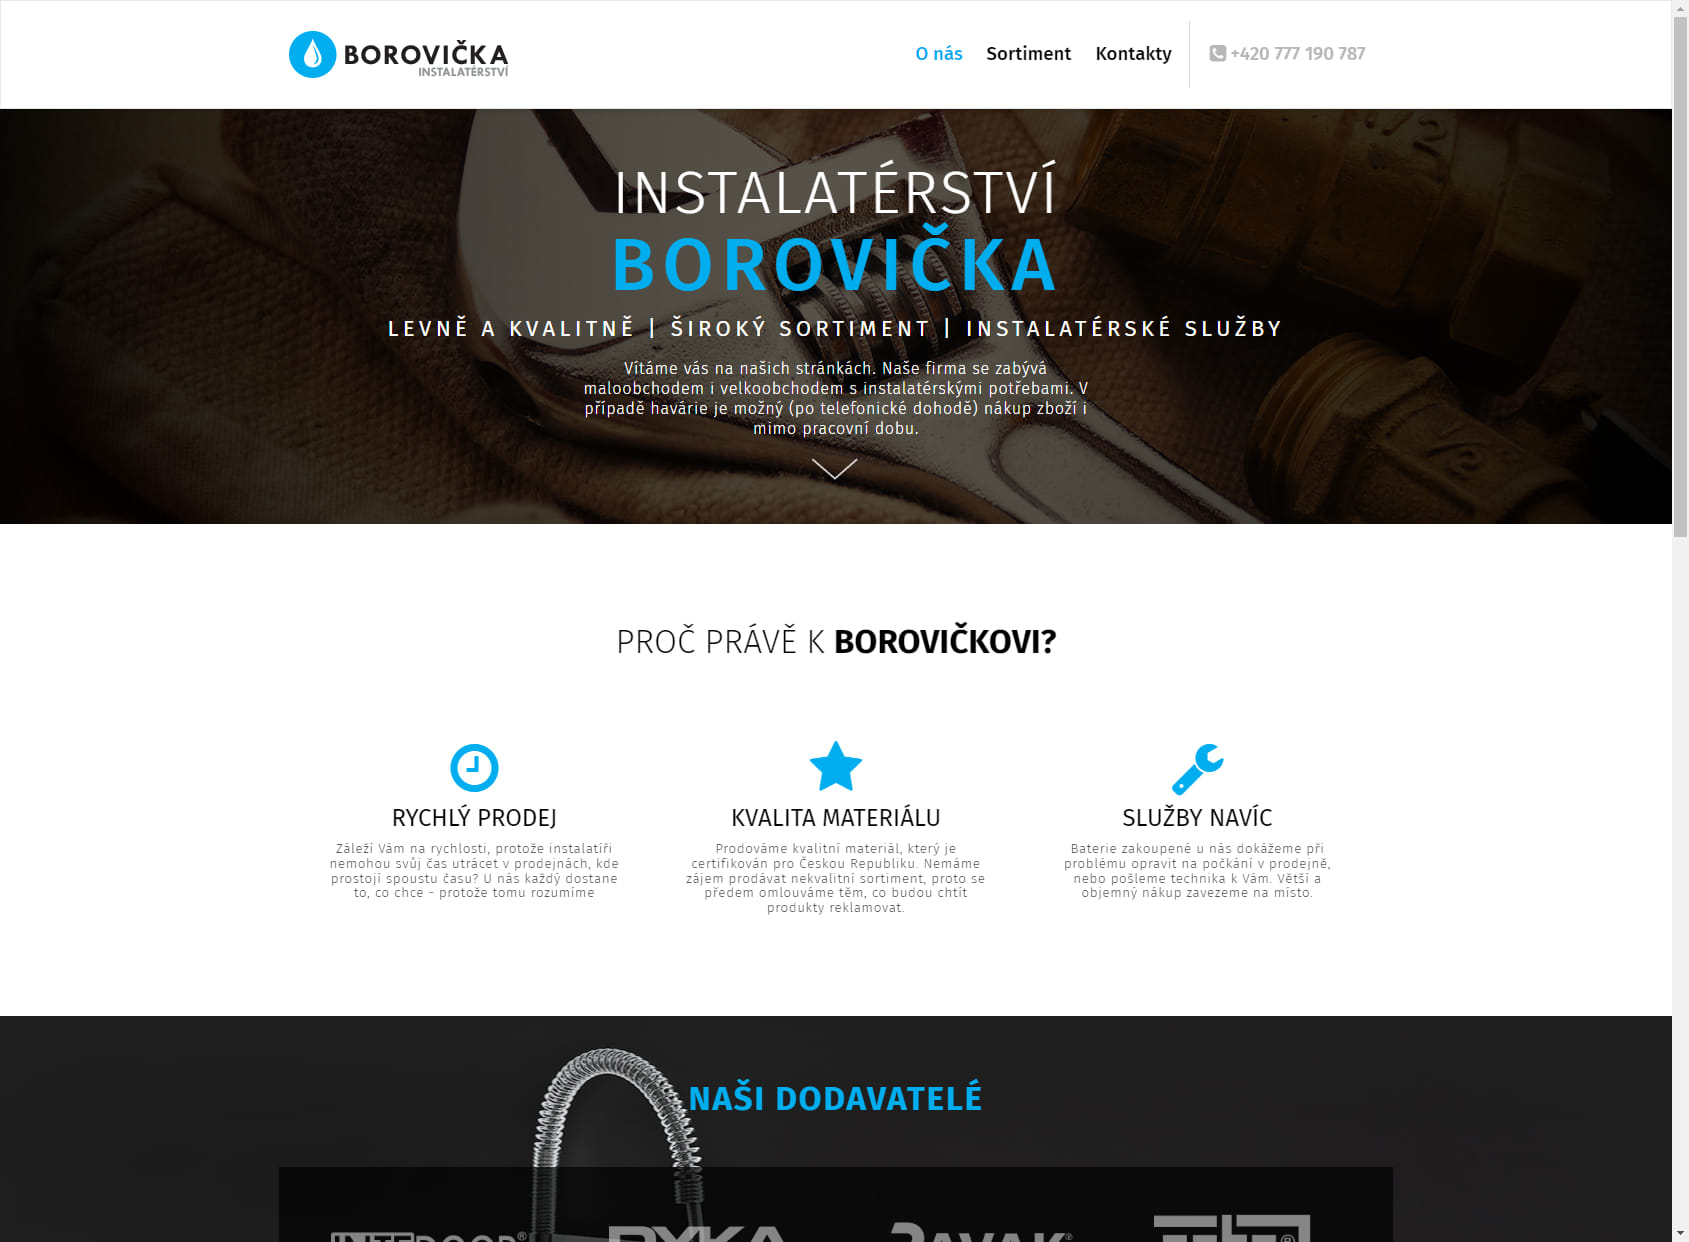 Plumbing supplies Borovička, Ltd.